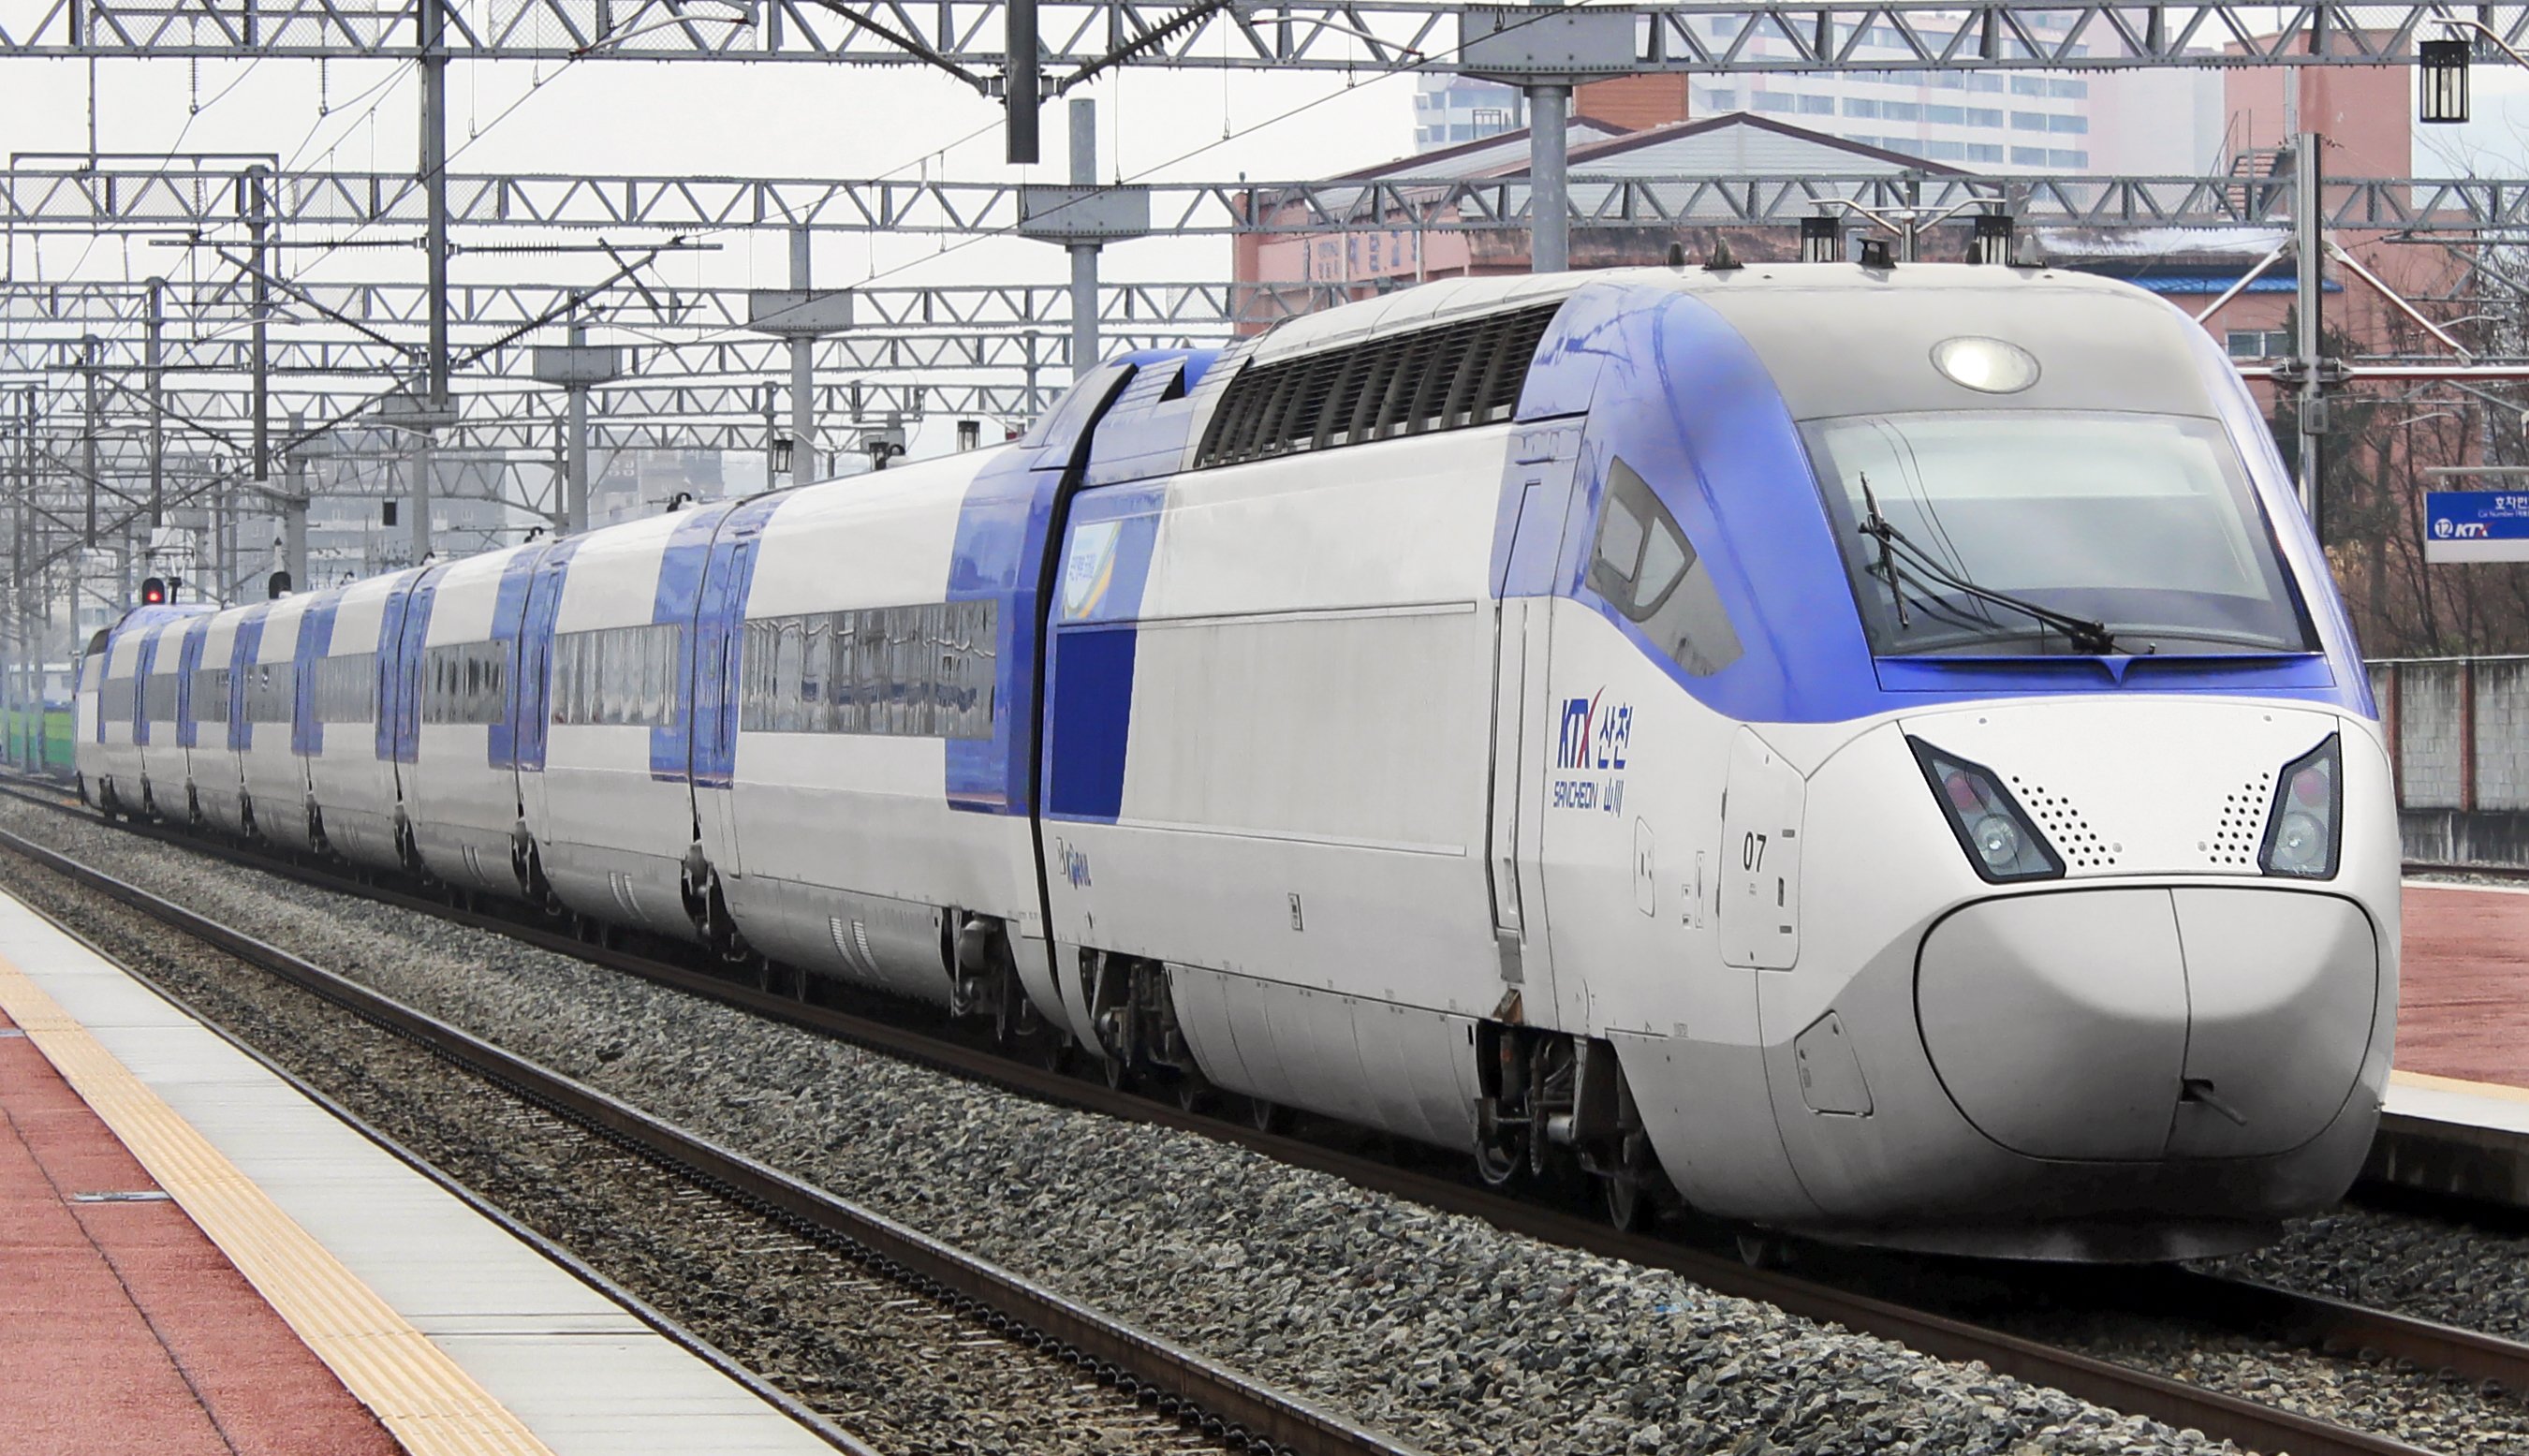 Korea Train Express - Wikipedia